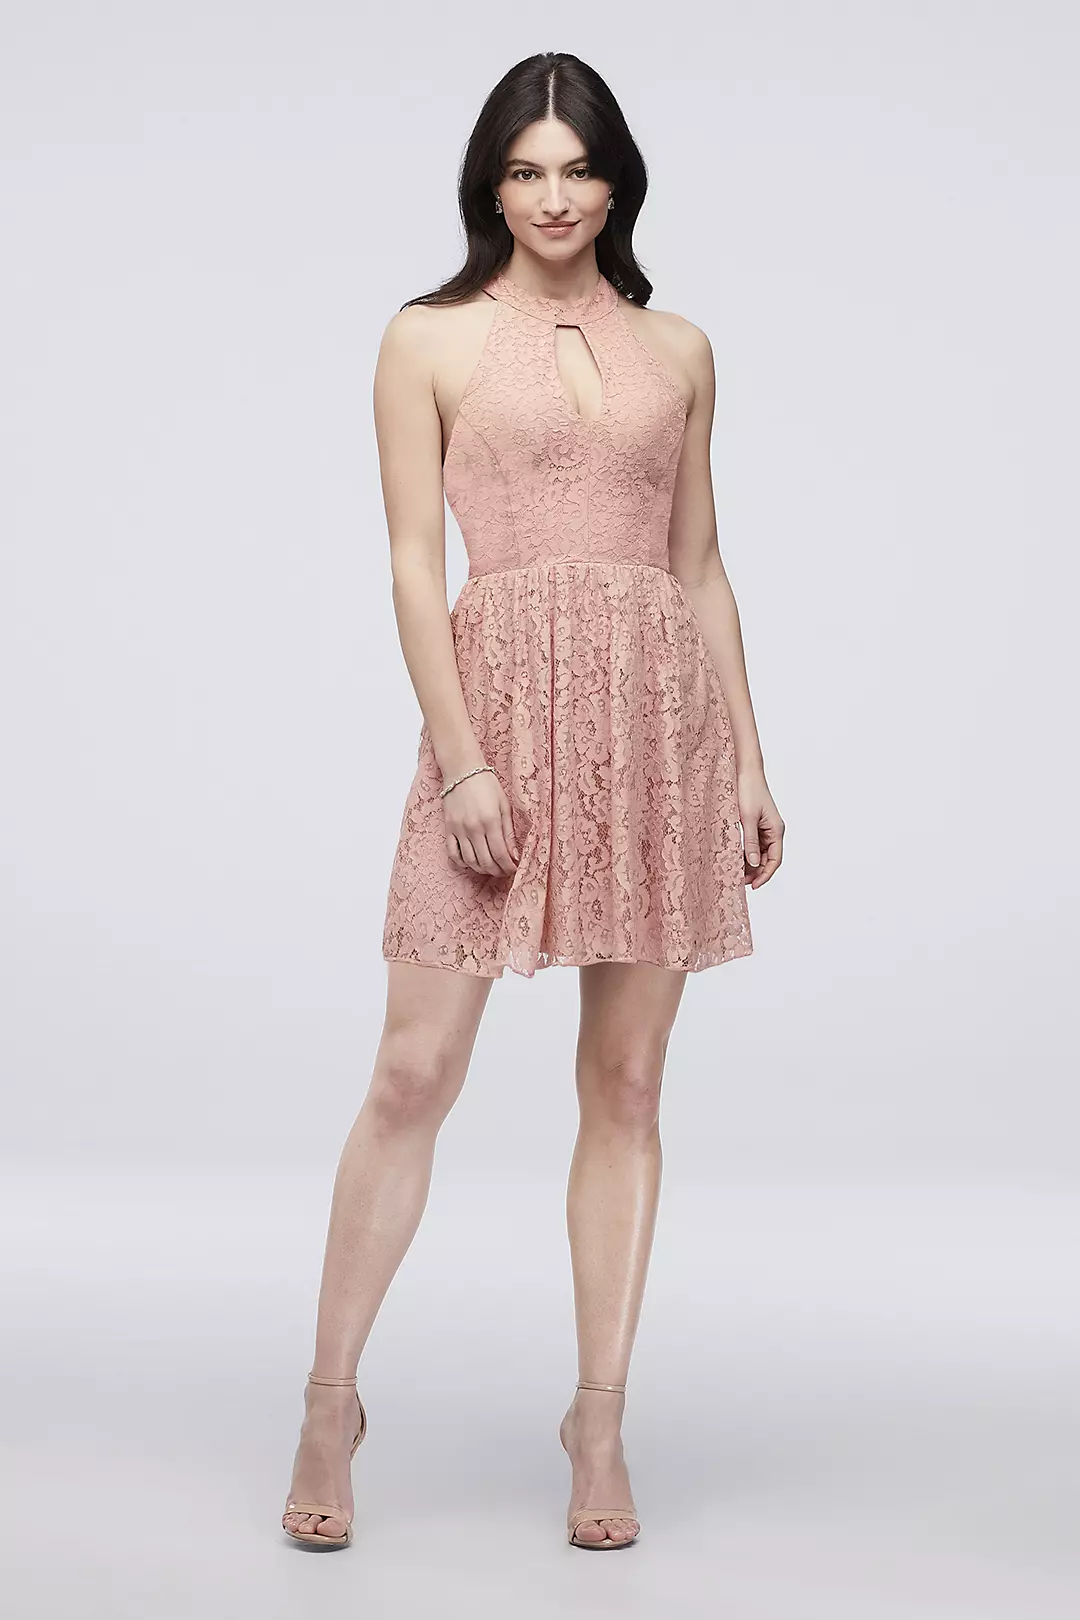 Lace A-Line Halter Short Dress with Keyhole Neck Image